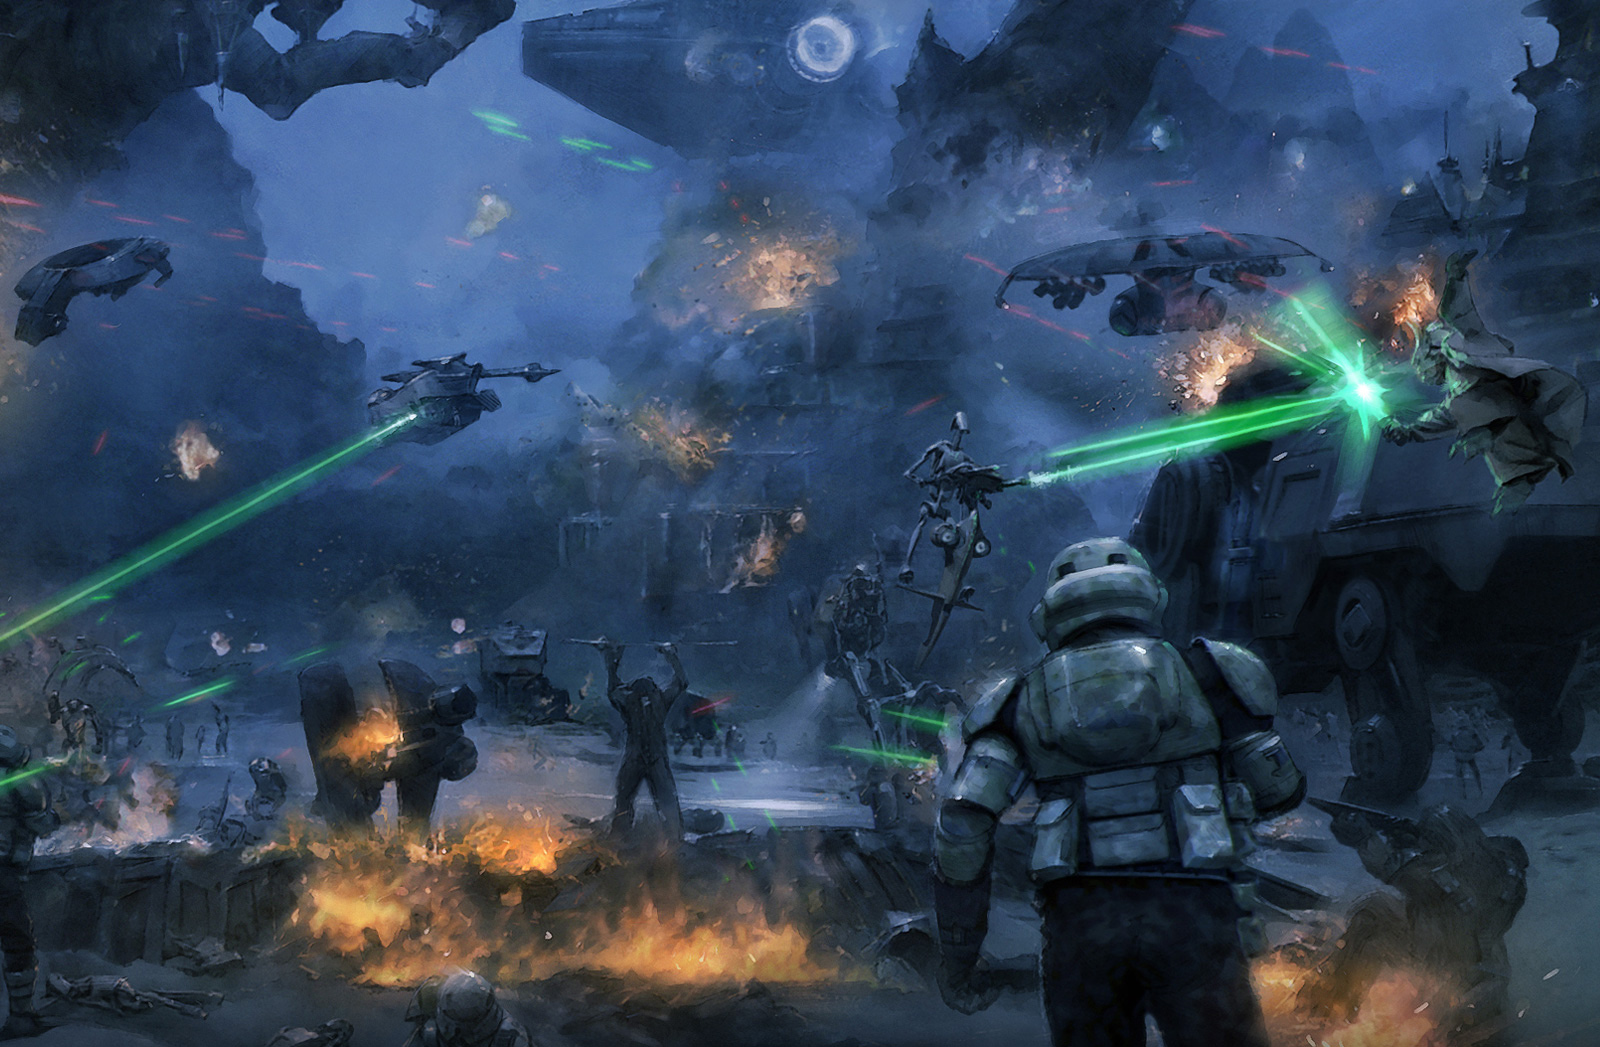 star wars clone battle